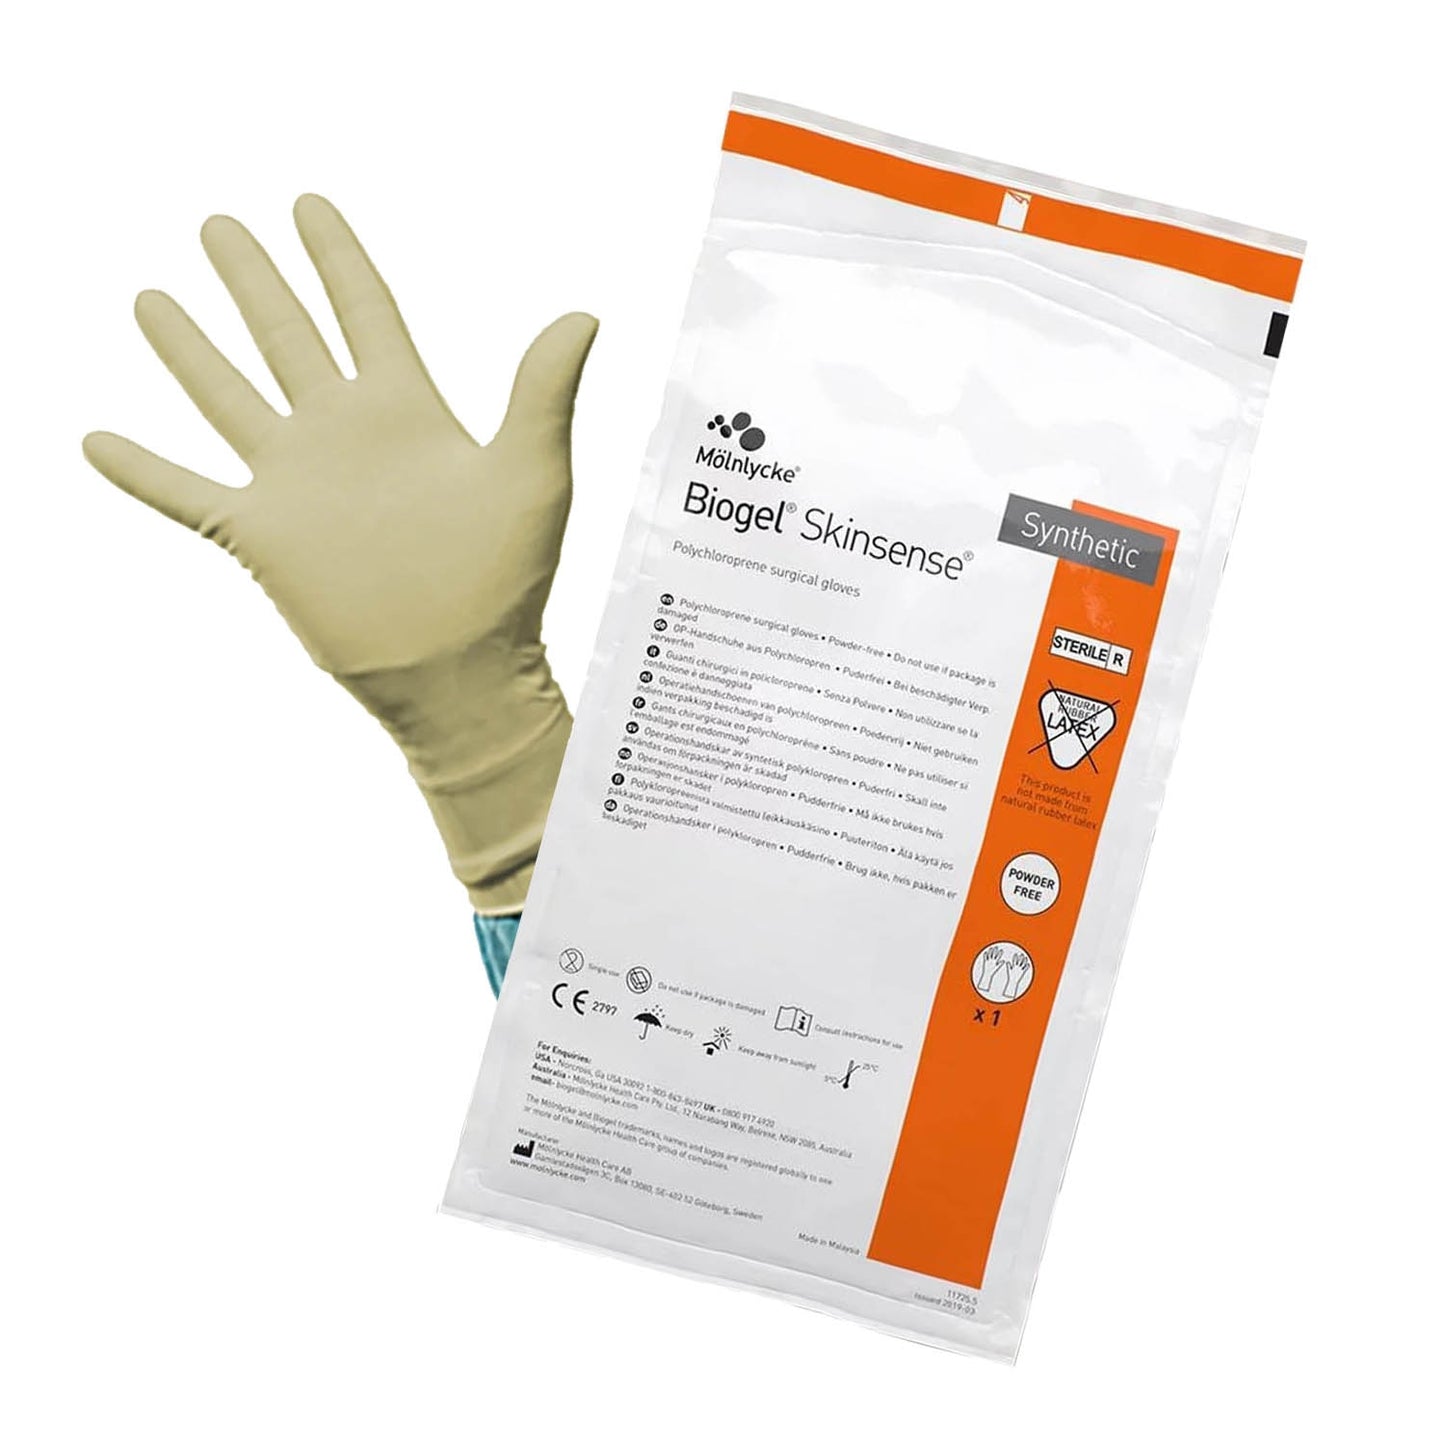 Biogel Skinsense-N Surgeon's Glove Size 5.5 Per pair